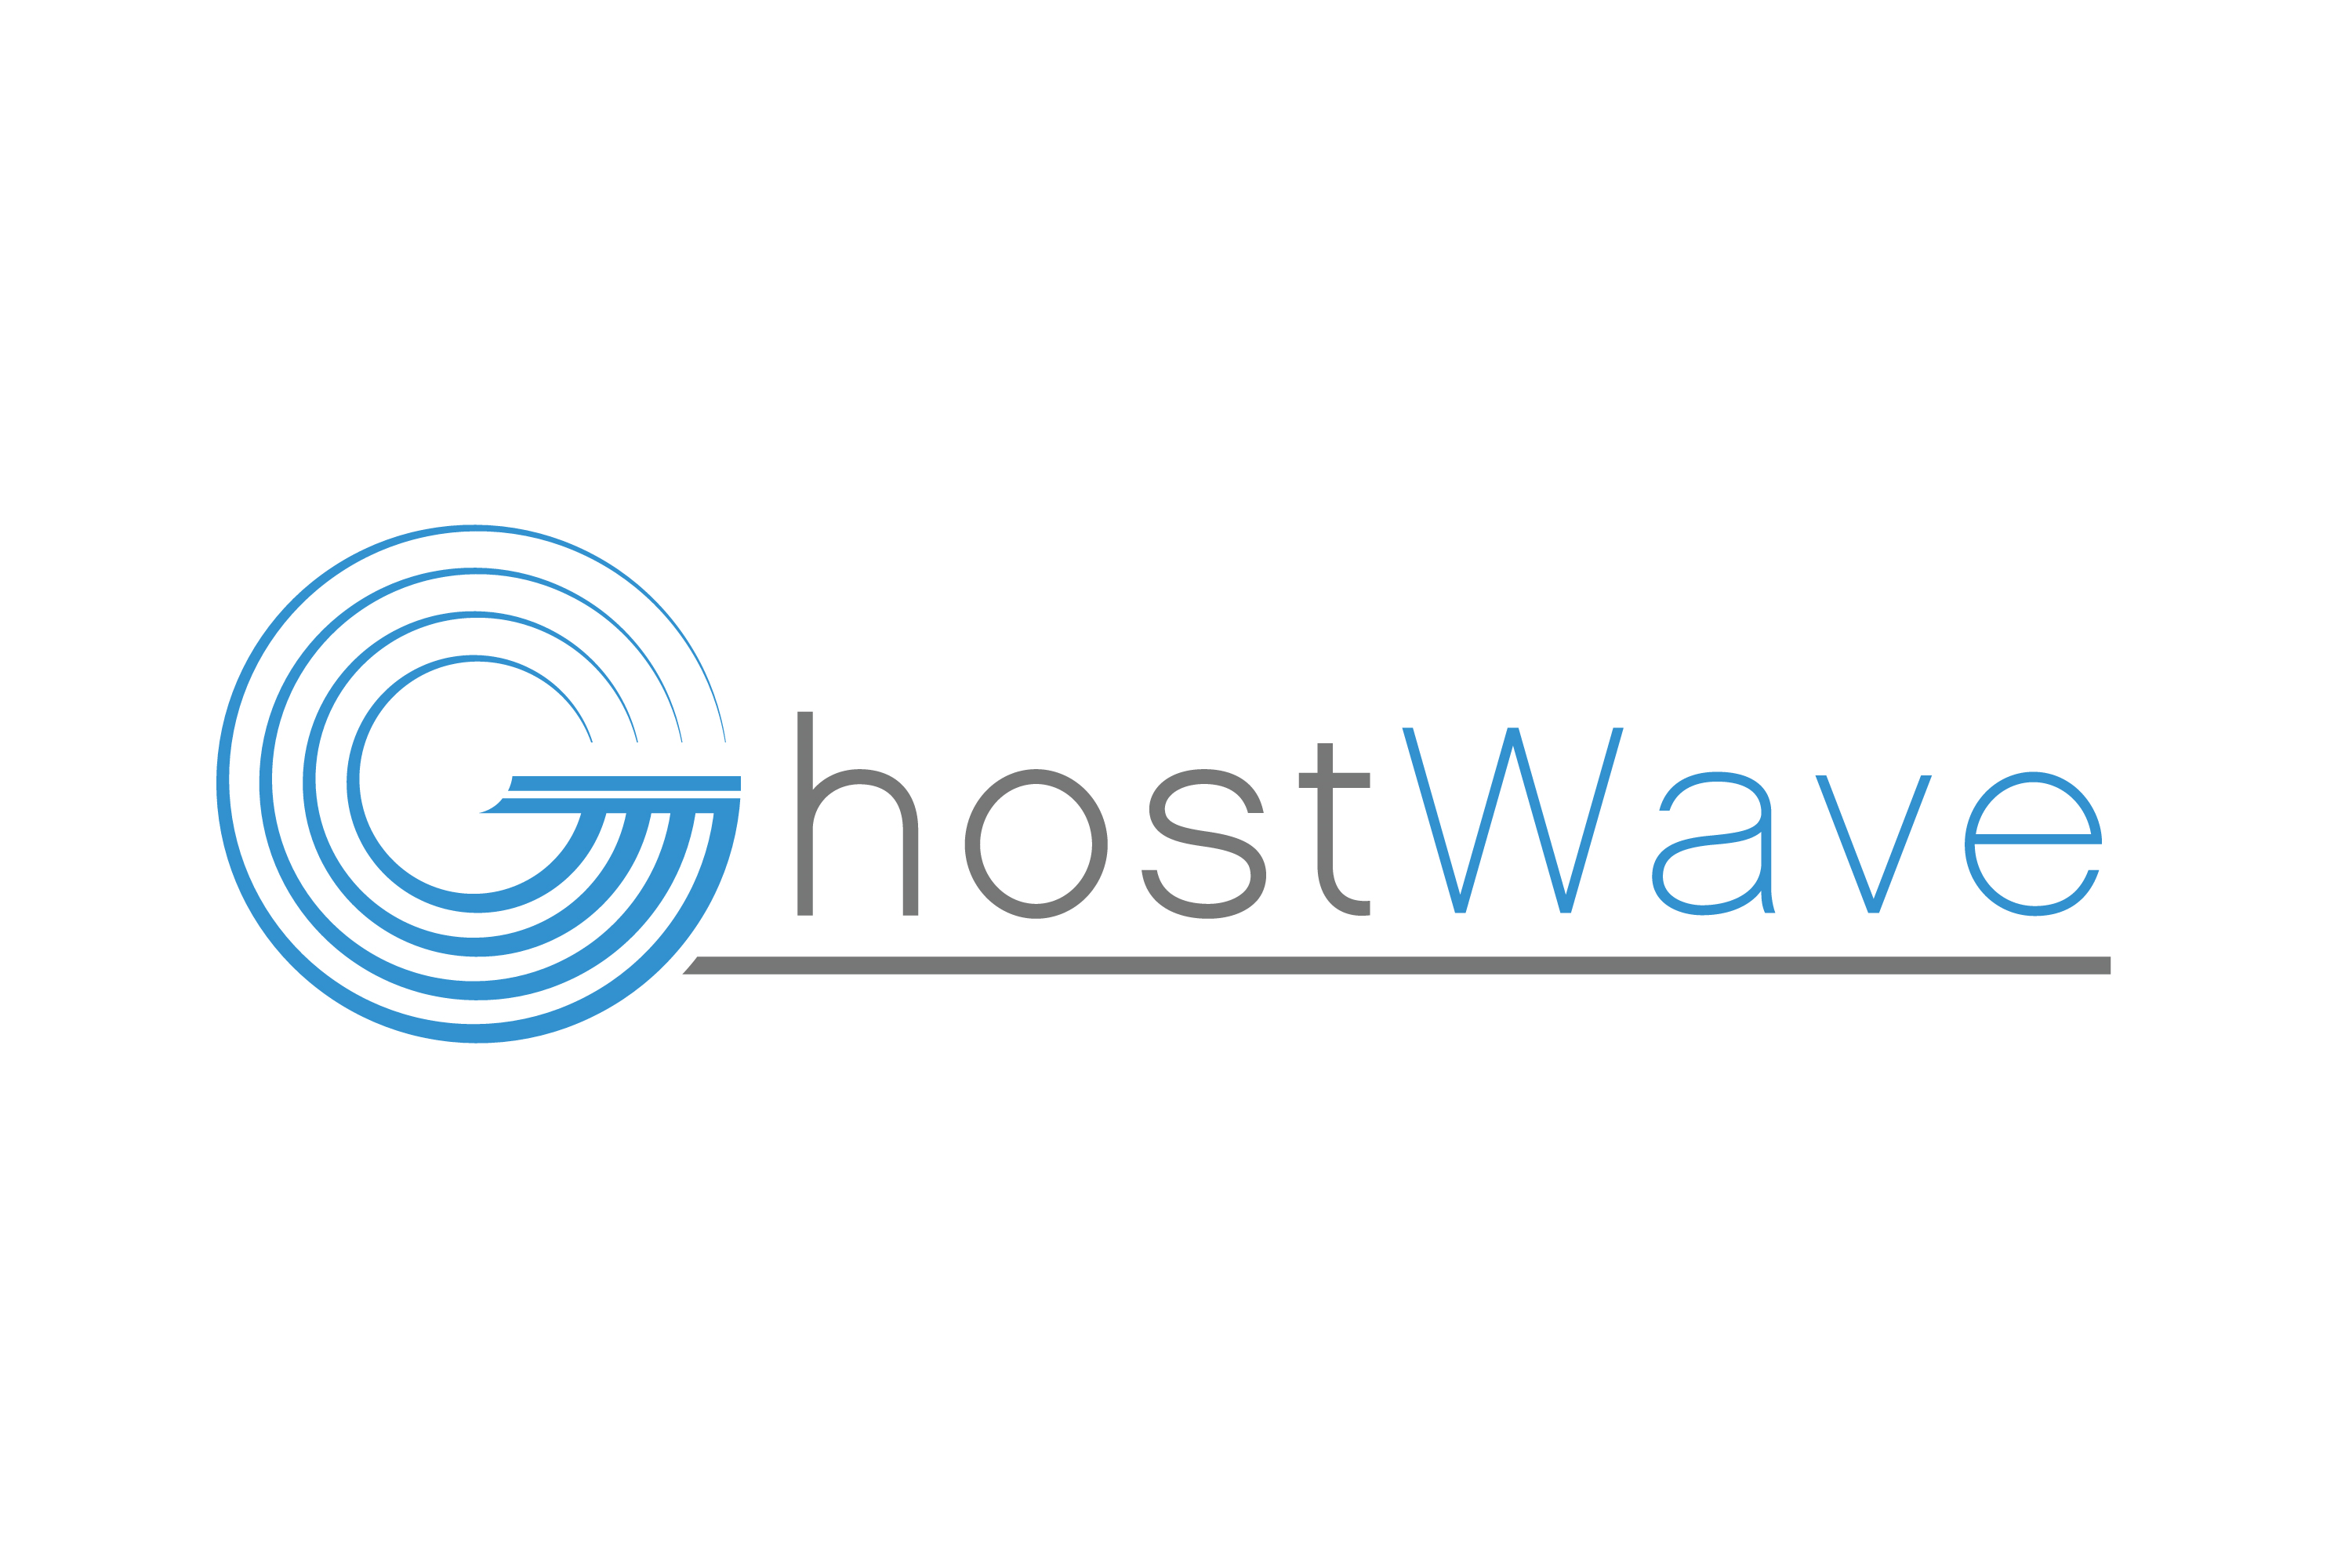 Ghostwave